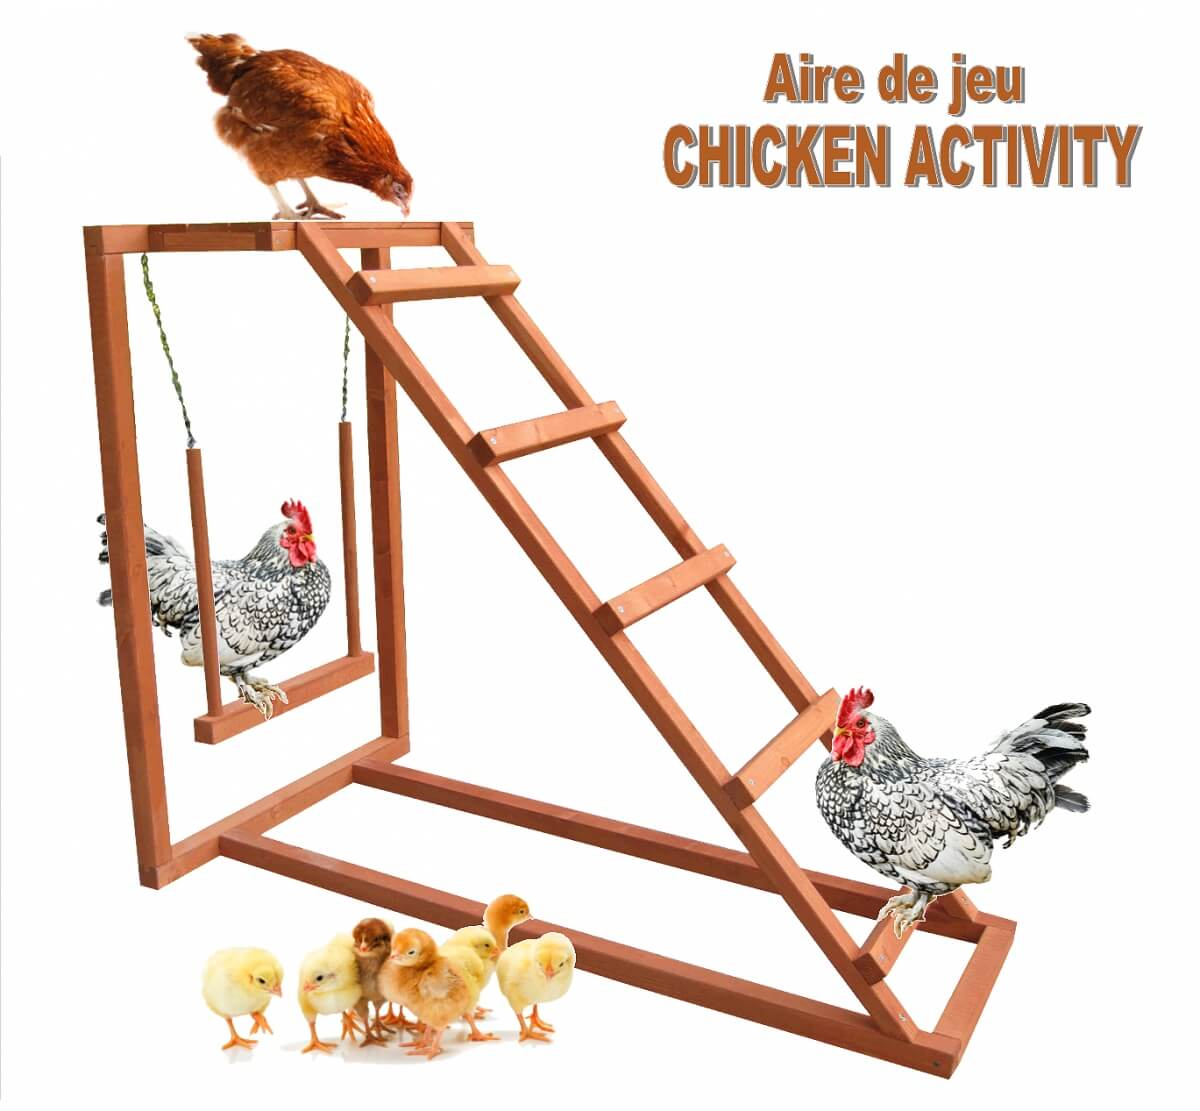 Parco giochi Chicken Activity per galline